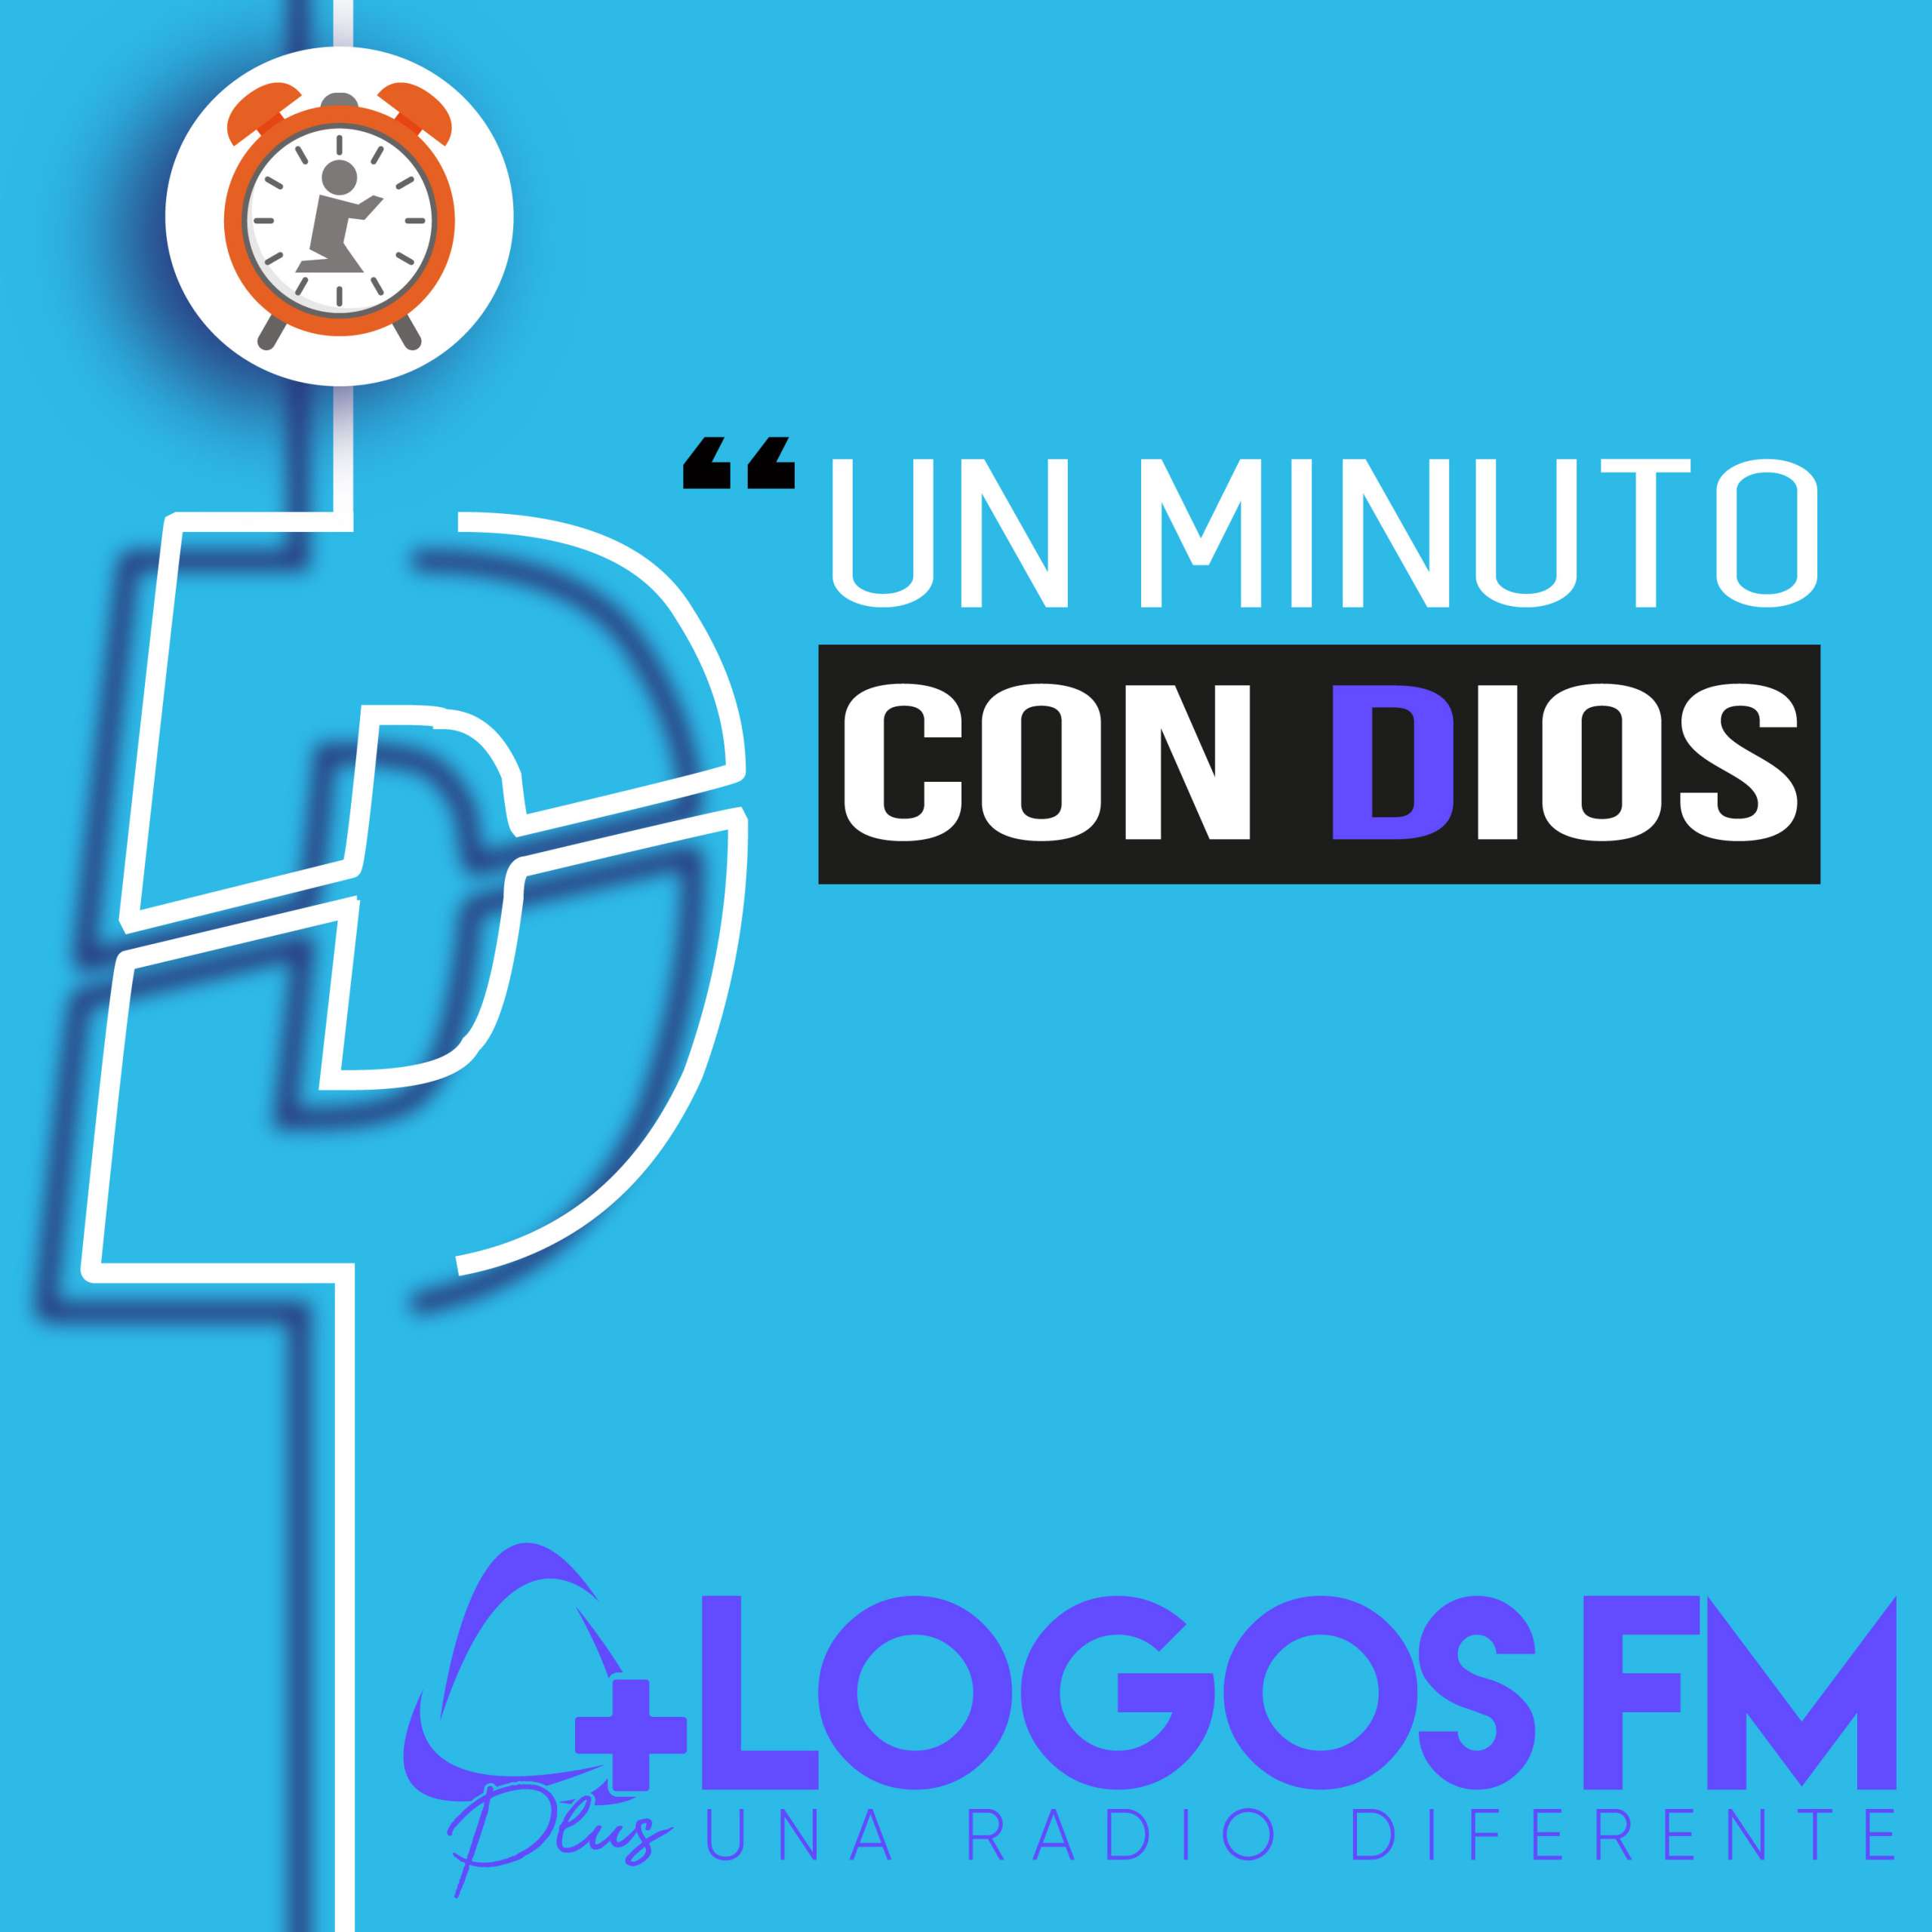 Un minuto con Dios - Episodio 389 - Loida Vargas